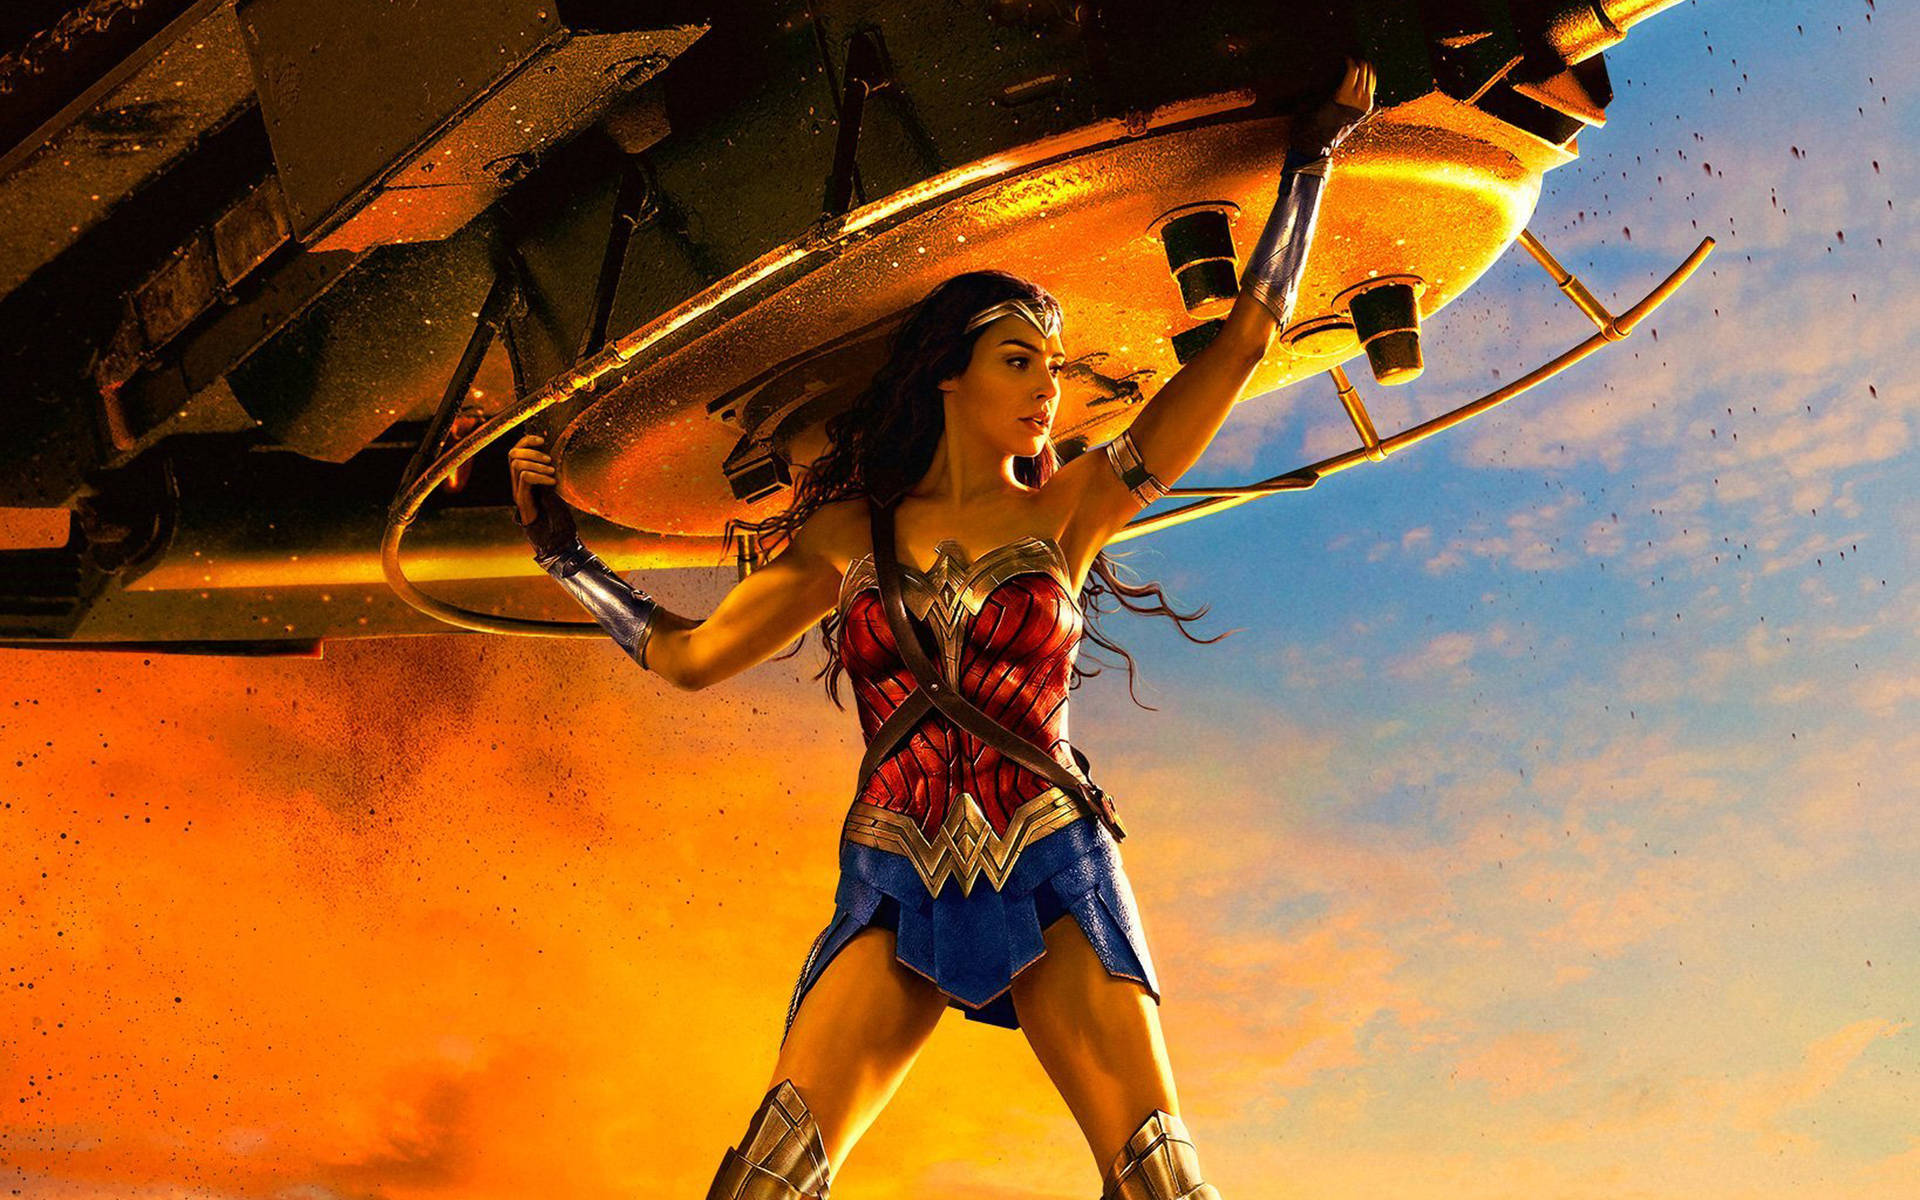 Wonder Woman powerfully lifting a tank. Wallpaper